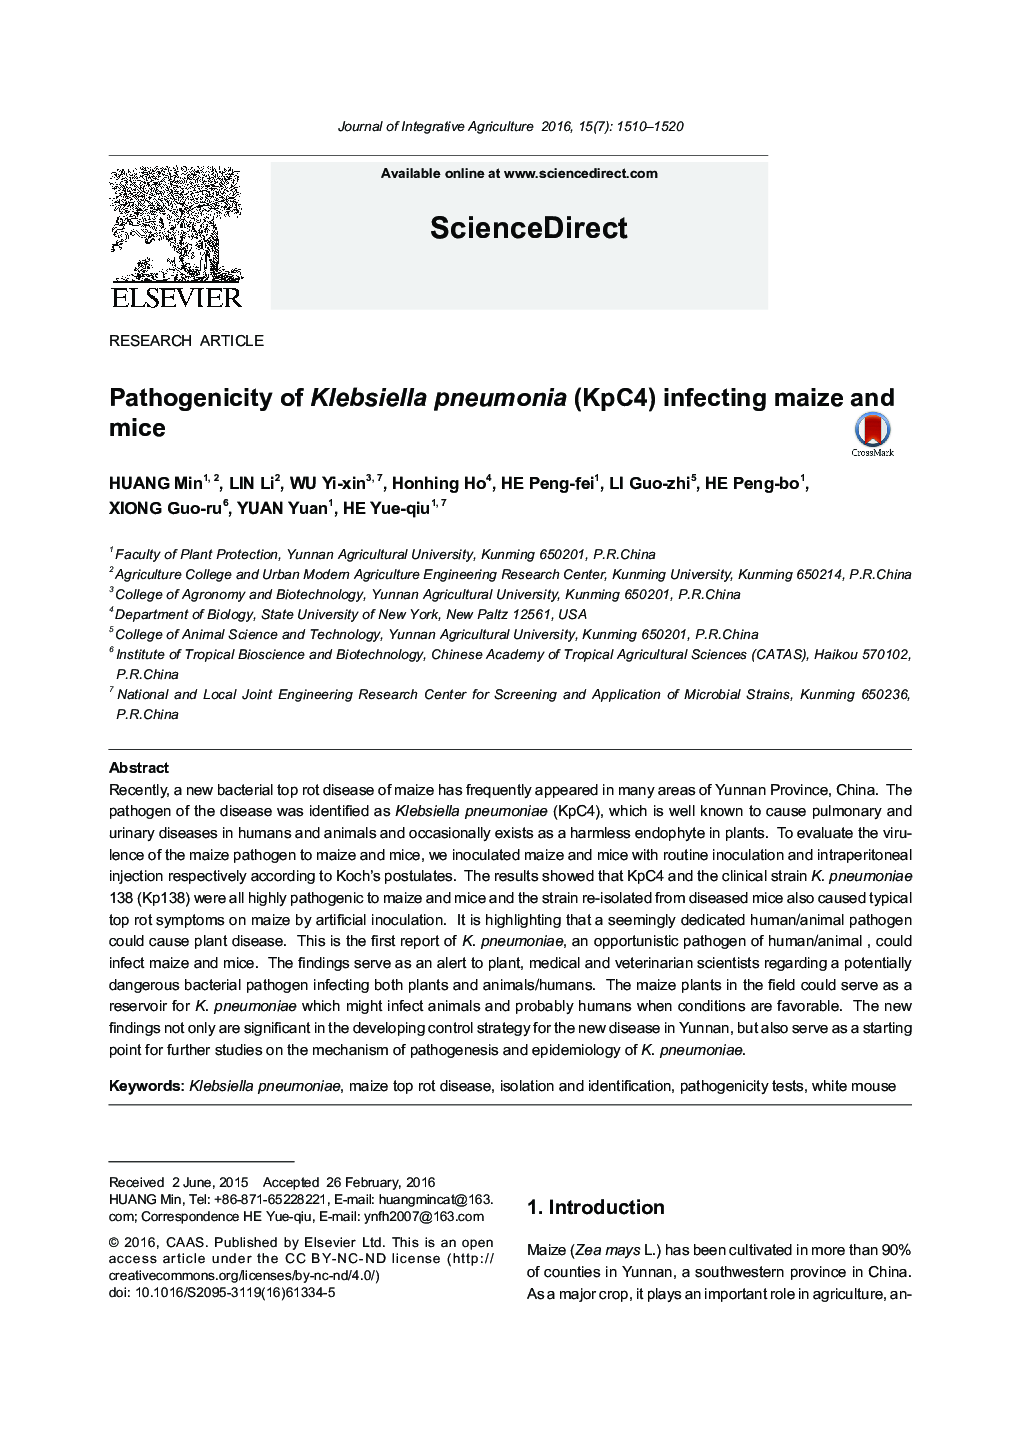 Pathogenicity of Klebsiella pneumonia (KpC4) infecting maize and mice